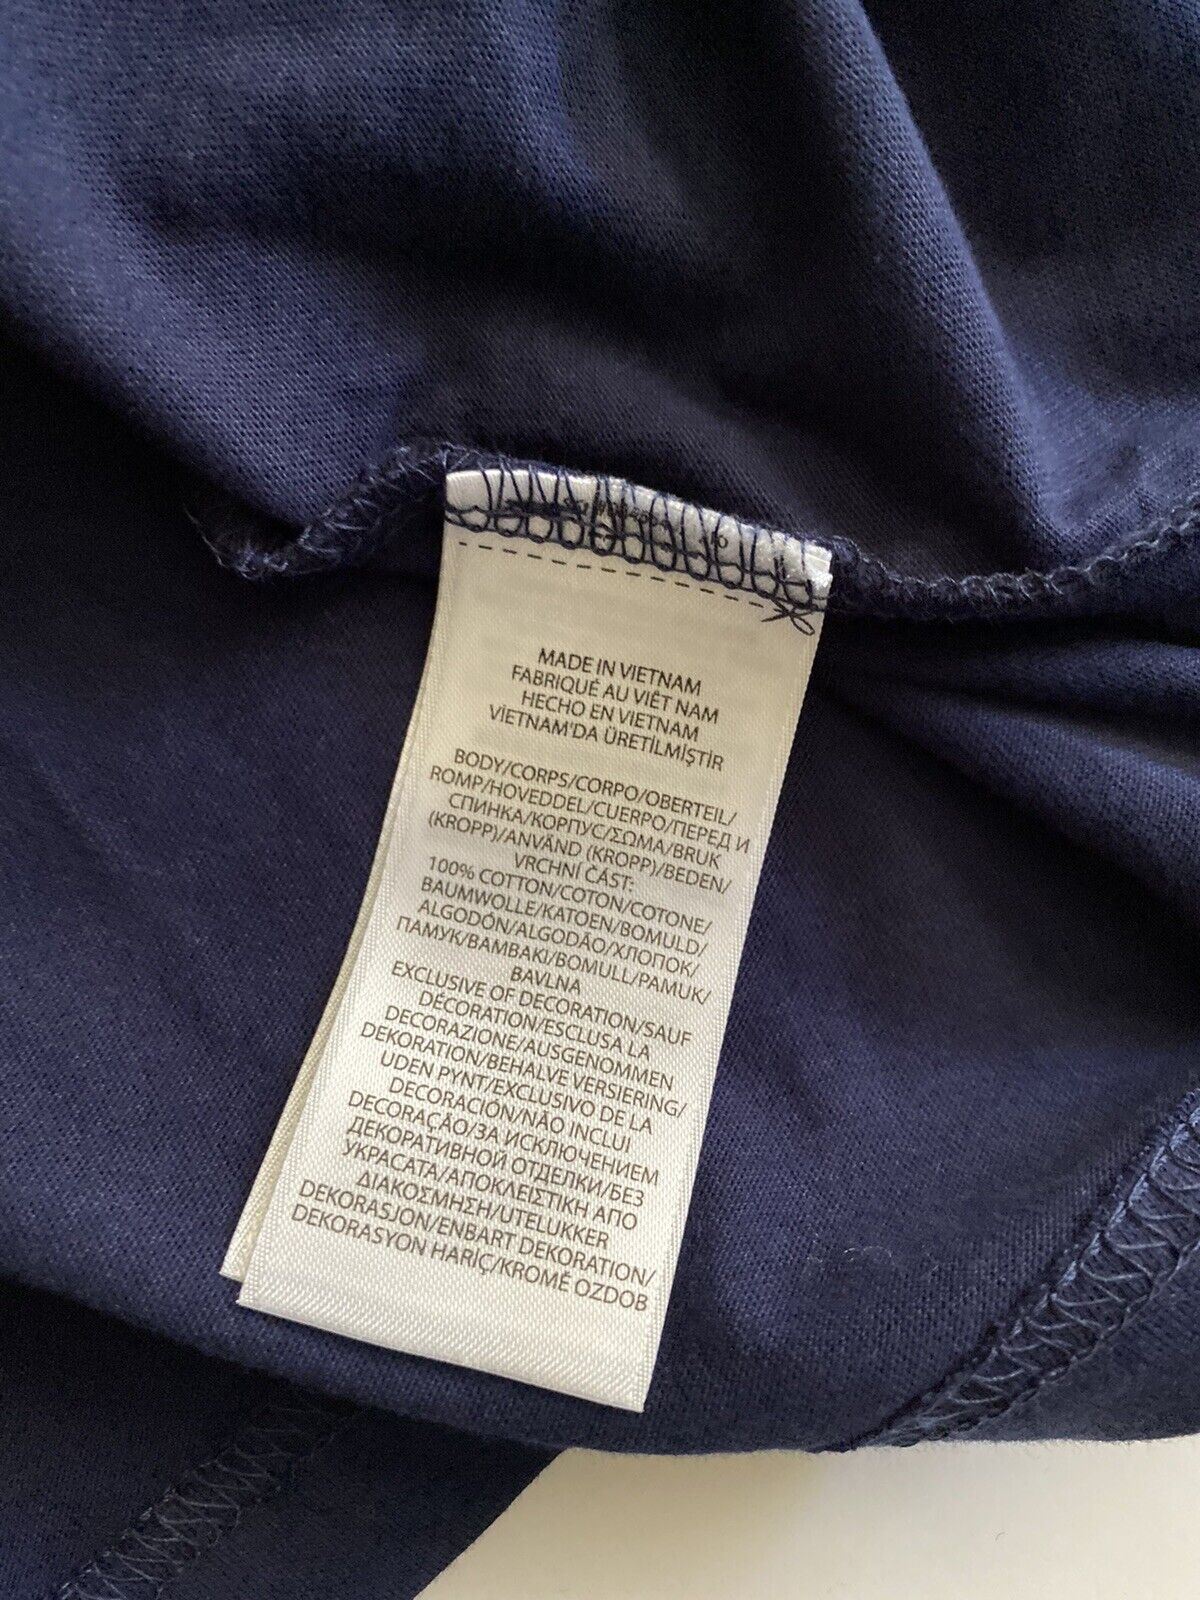 NWT Polo Ralph Lauren Long Sleeve Signature Logo Sweatshirt Hoodie Navy M